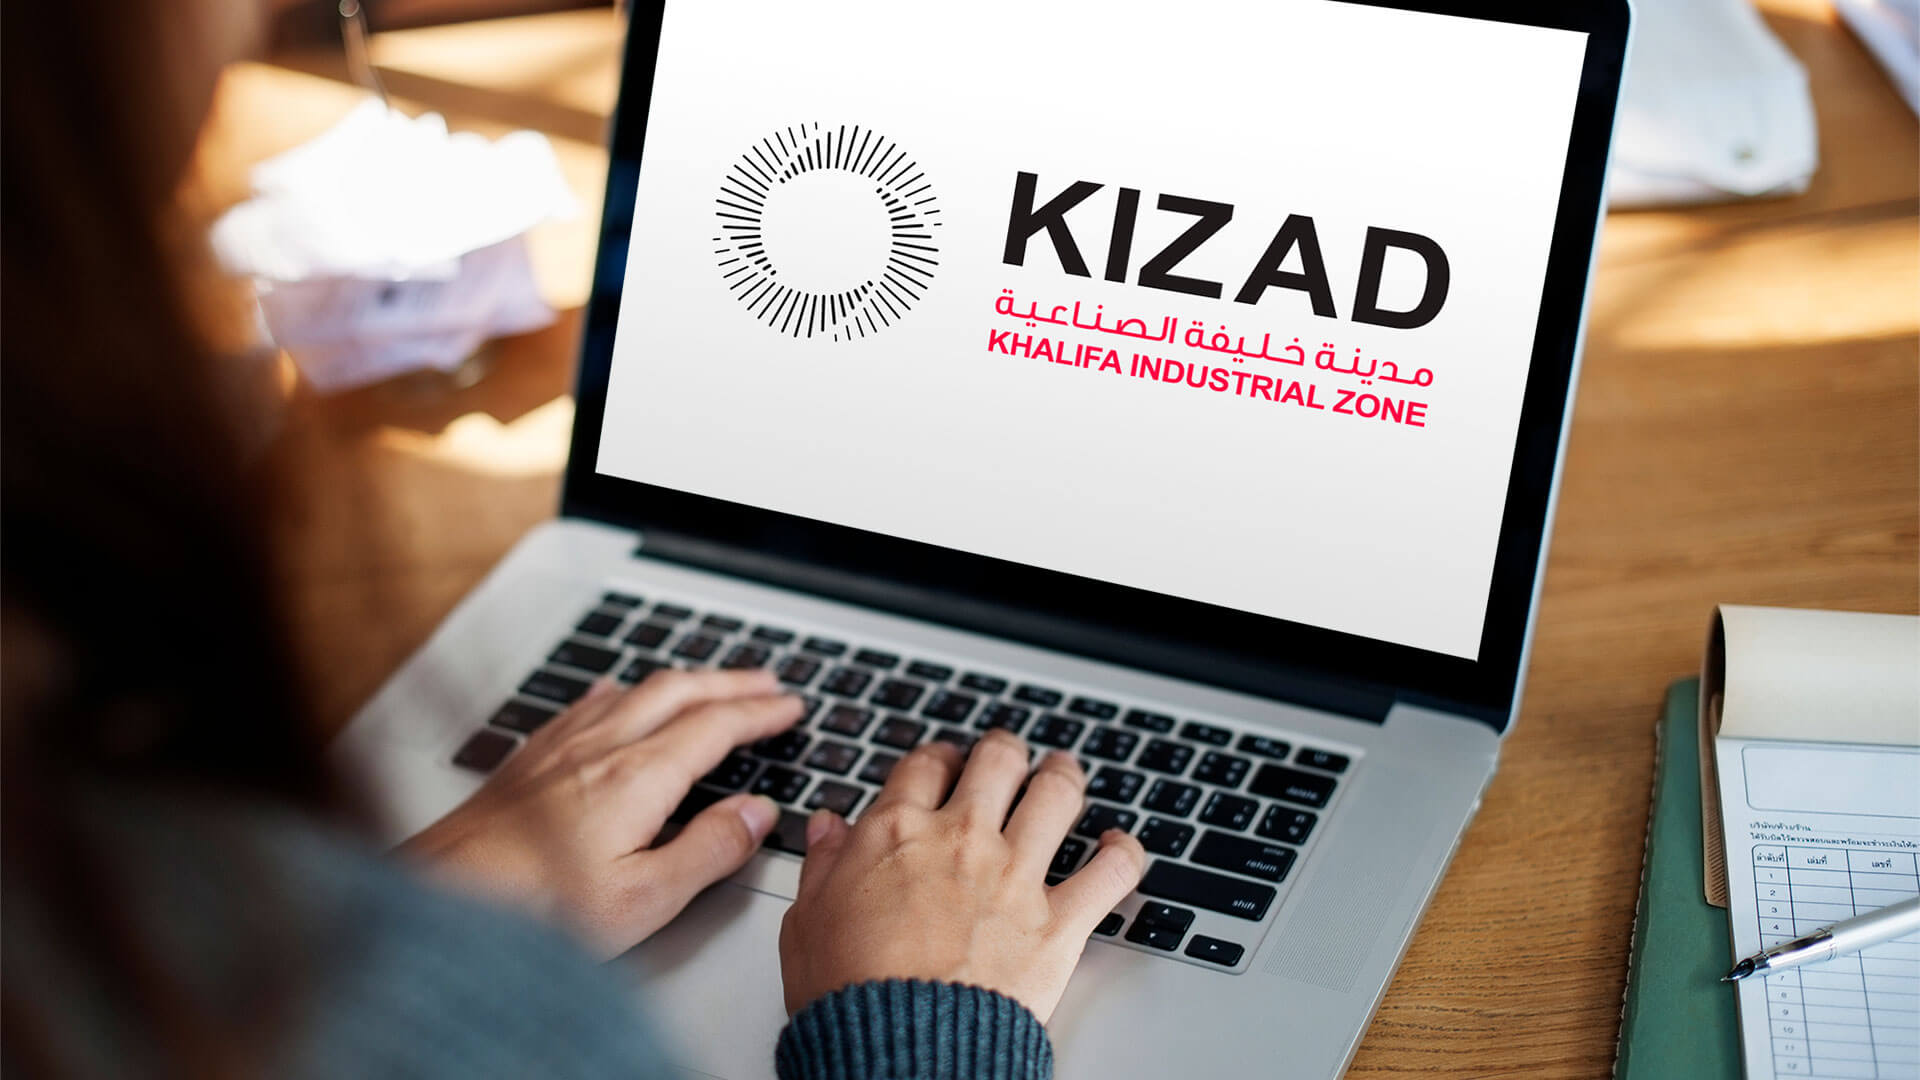 KIZAD - khalifa Industrial Zone Abu Dhabi